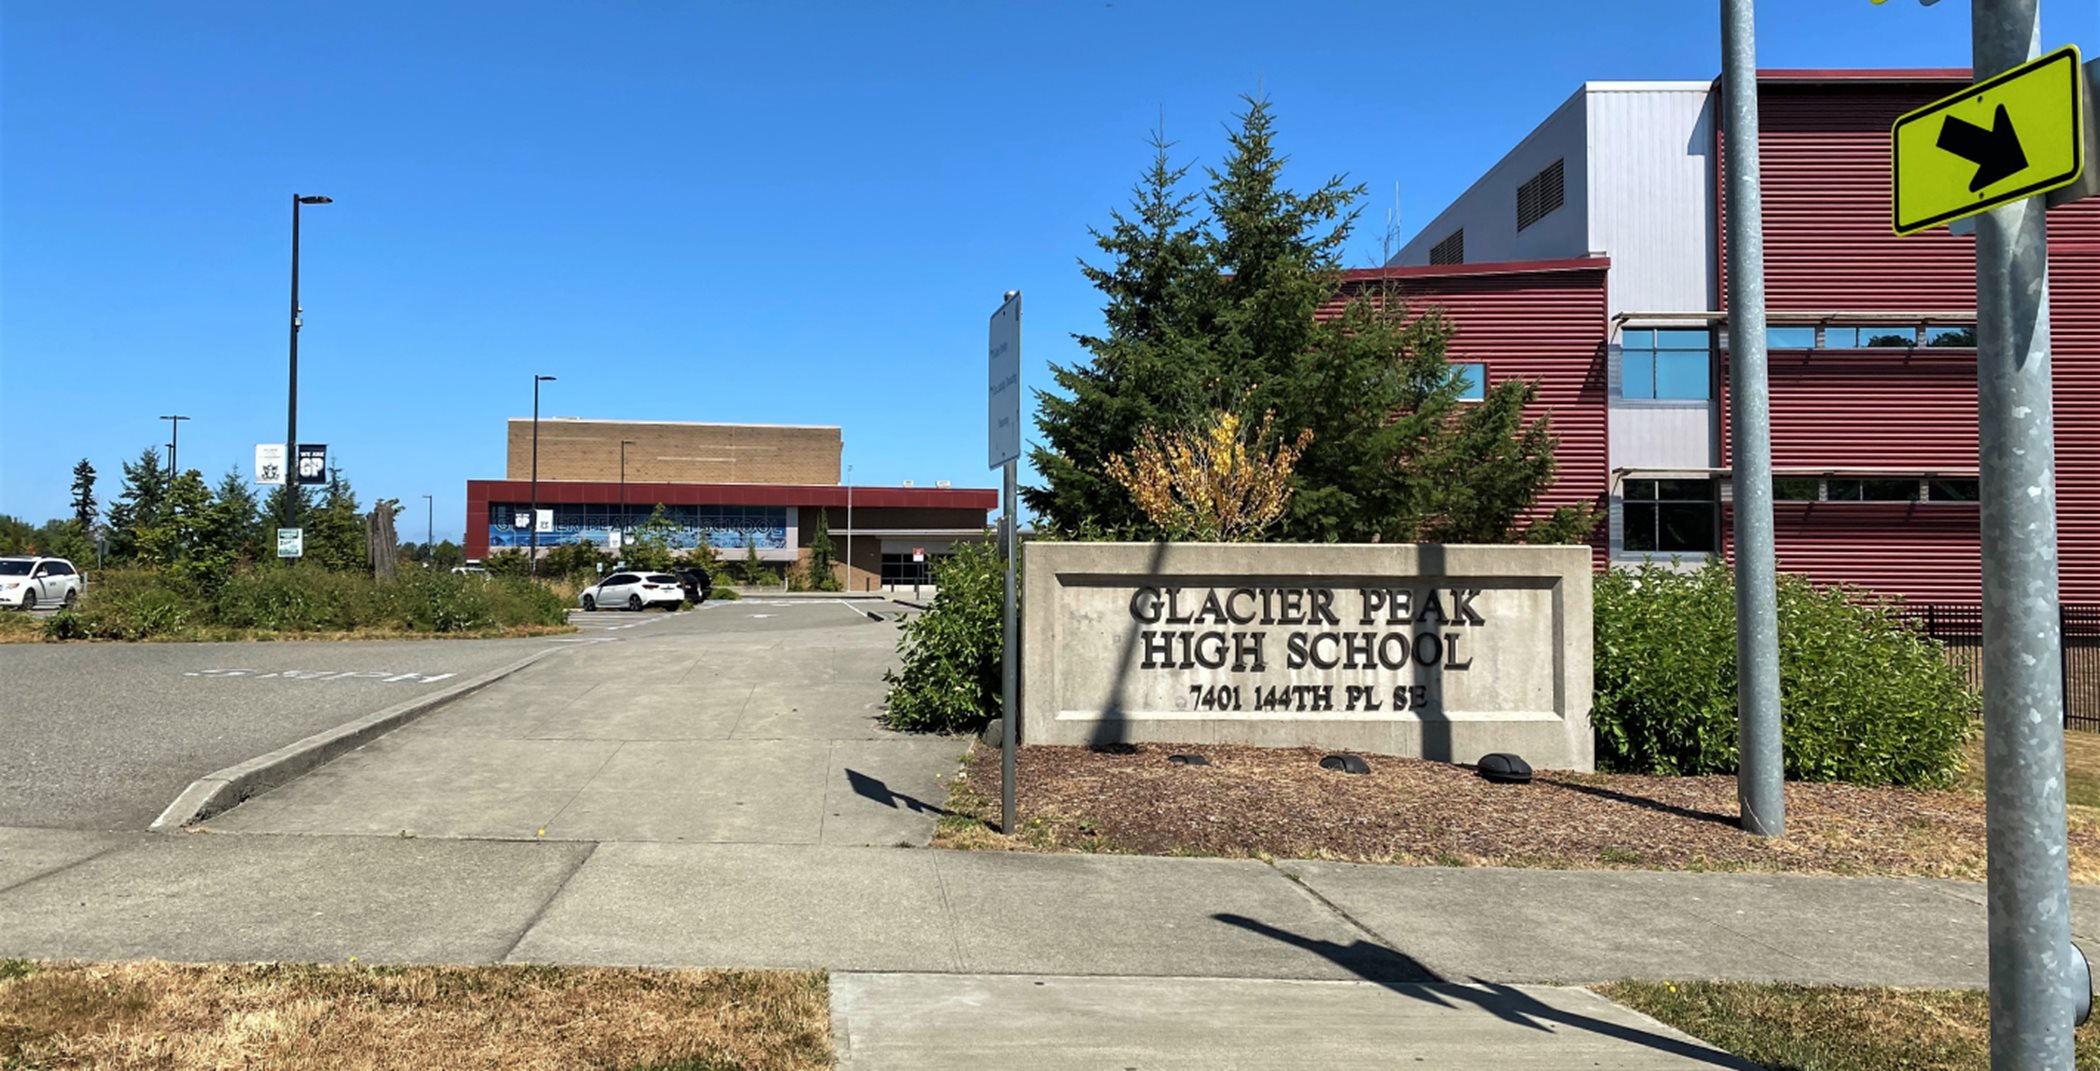 Glacier Peak high school entry sign in daylight